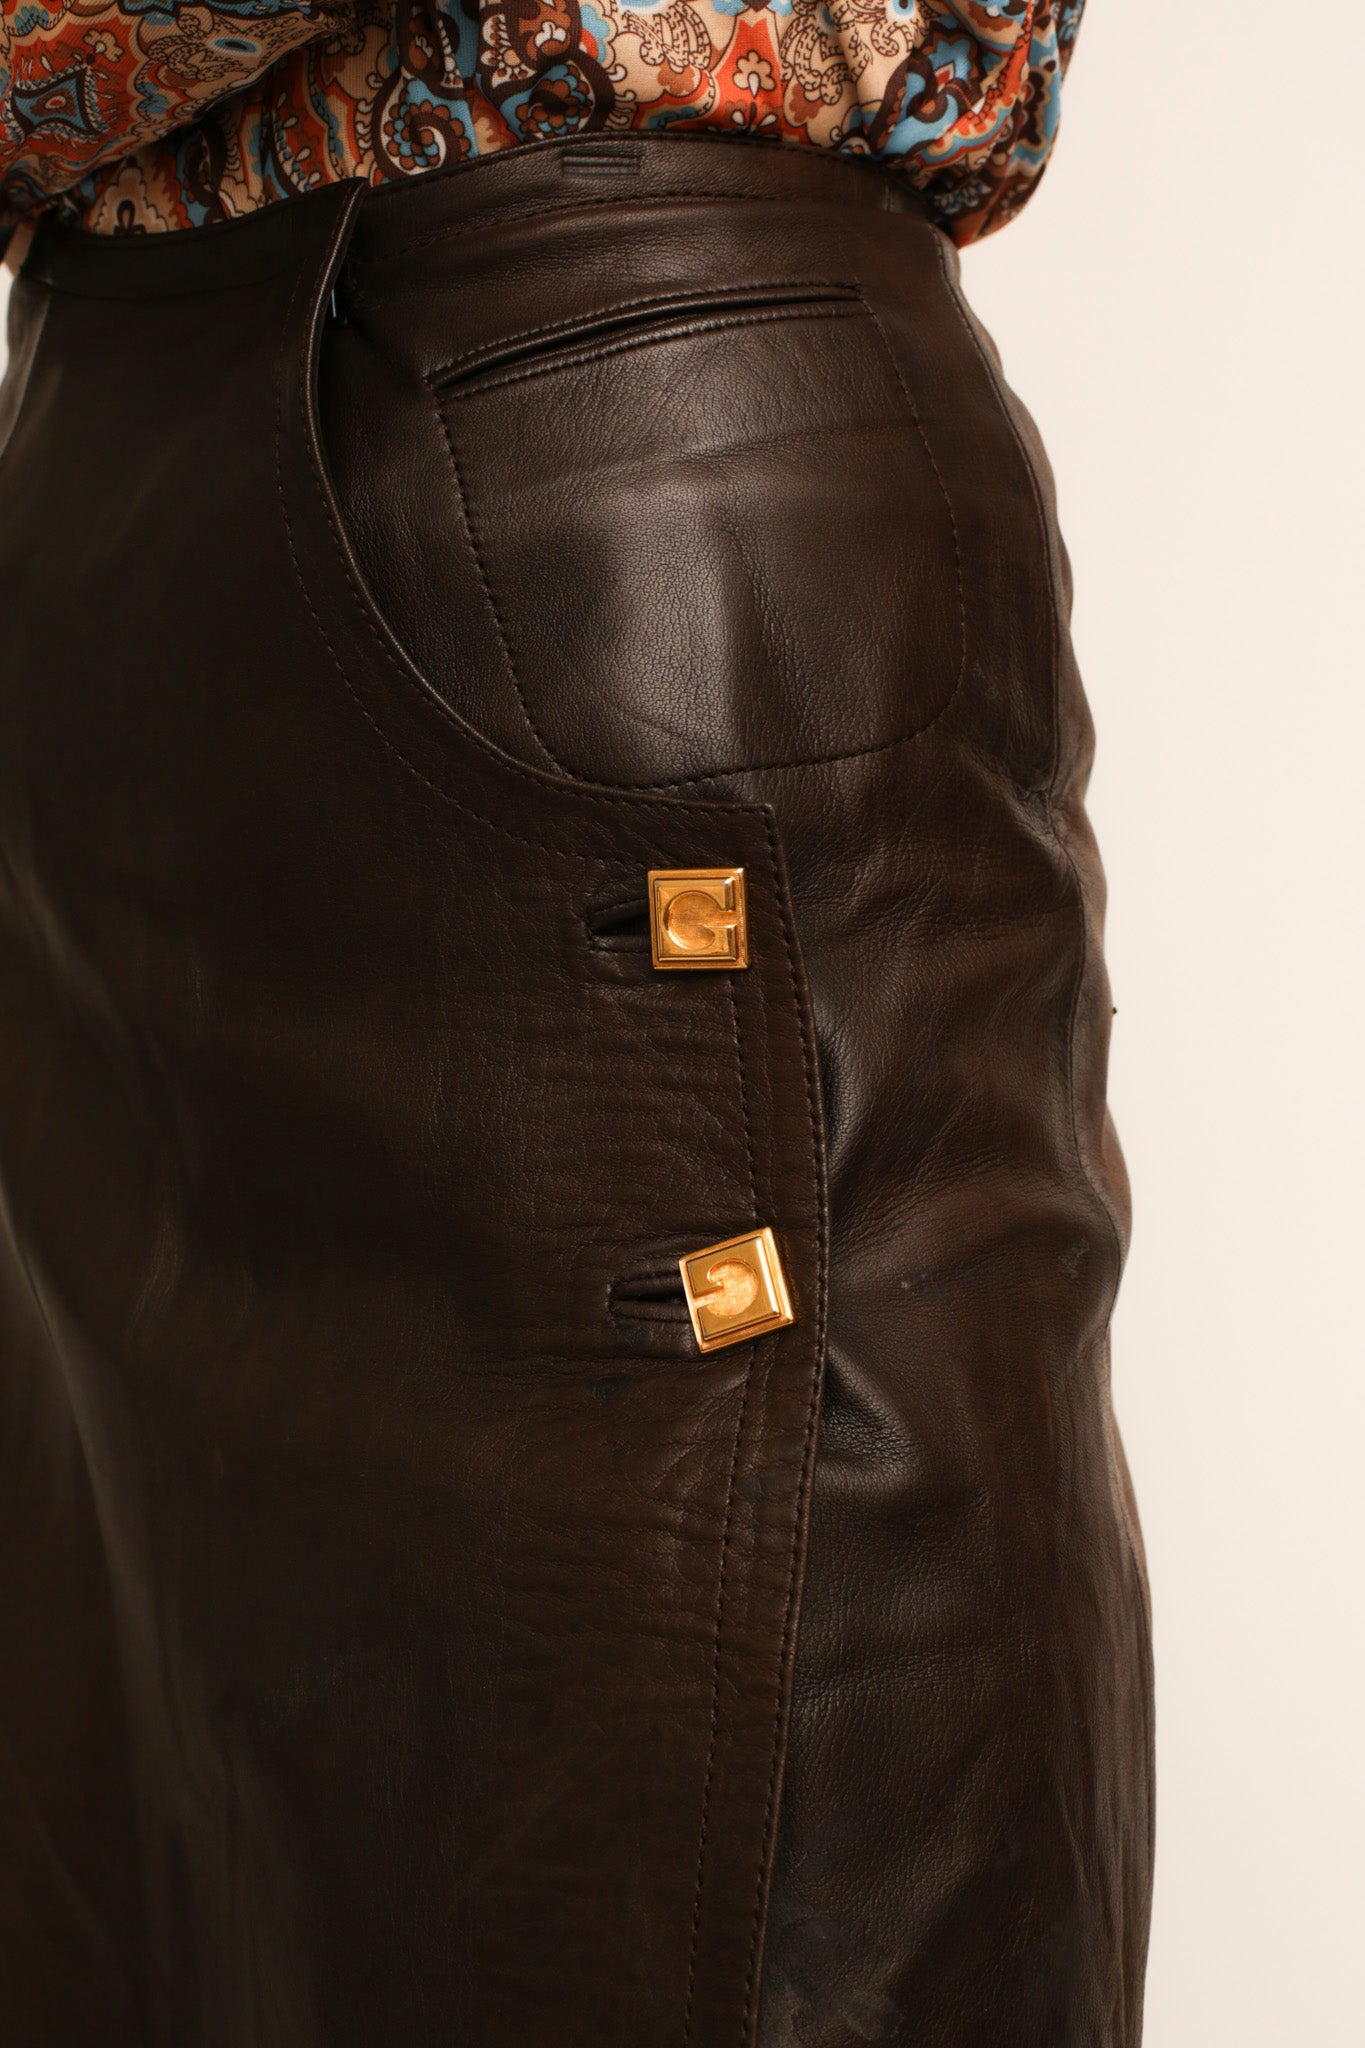 Gheradini Leather Skirt